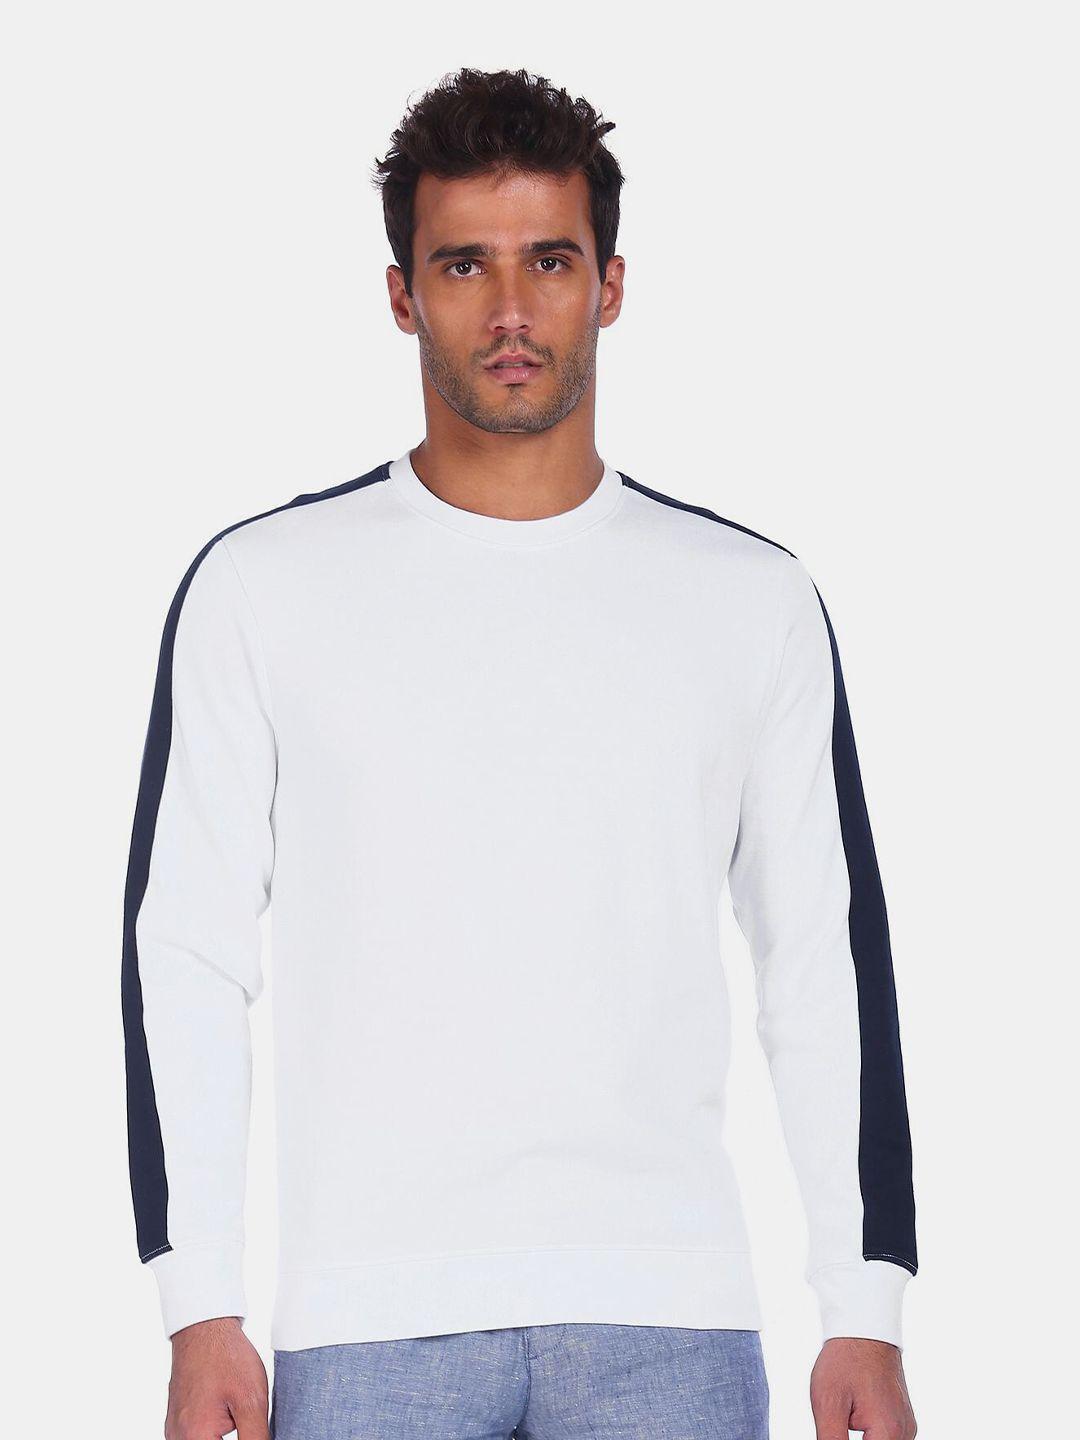 arrow-sport-men-white-solid-cotton-pullover-sweatshirt